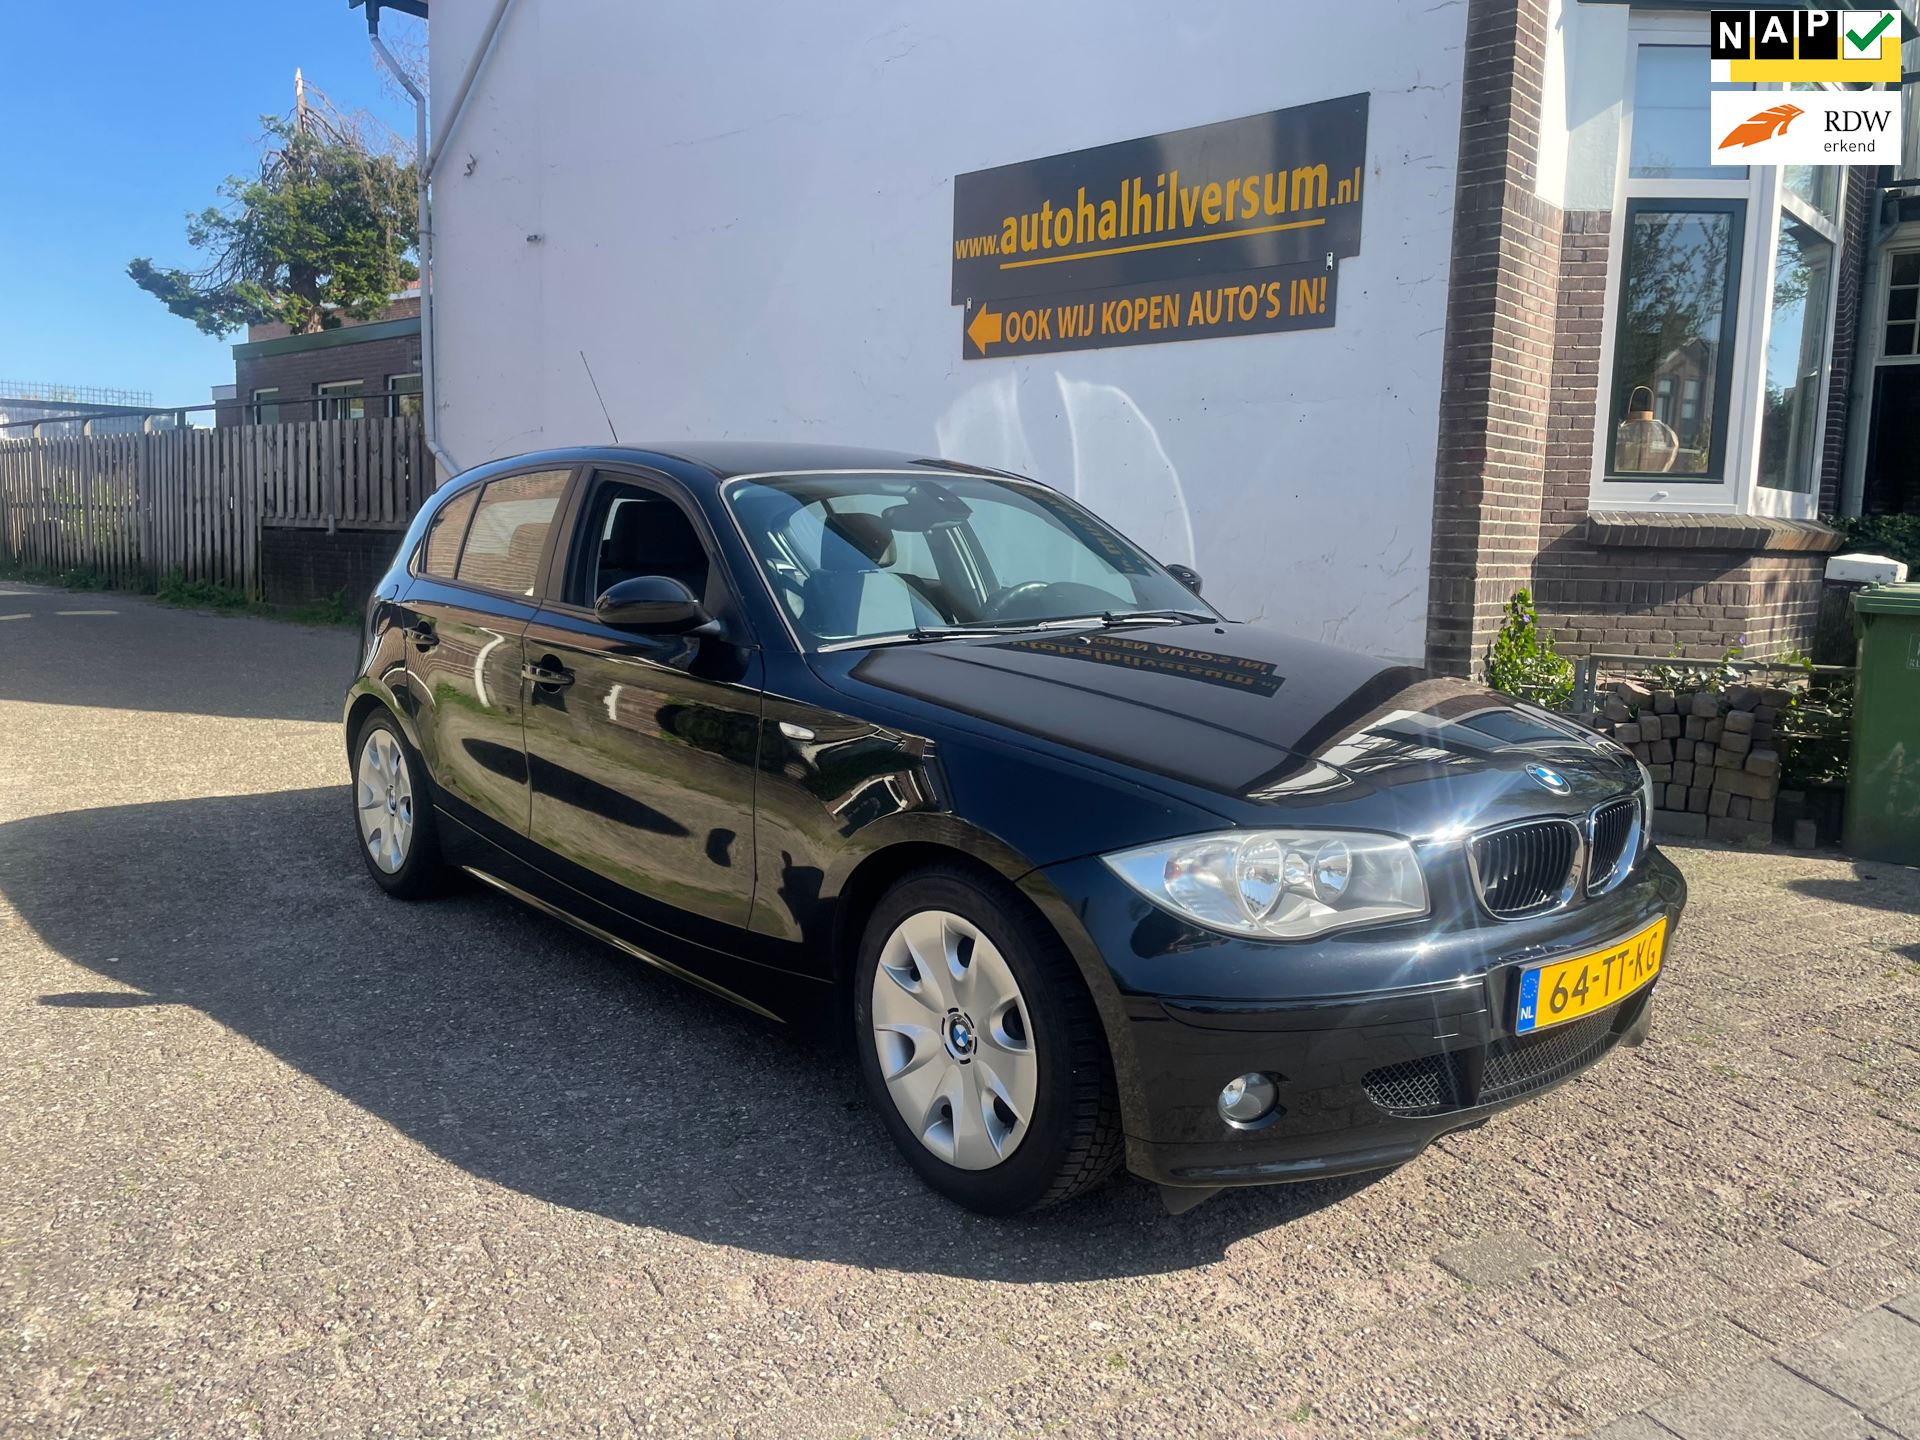 BMW 1-serie occasion - Autohal Hilversum